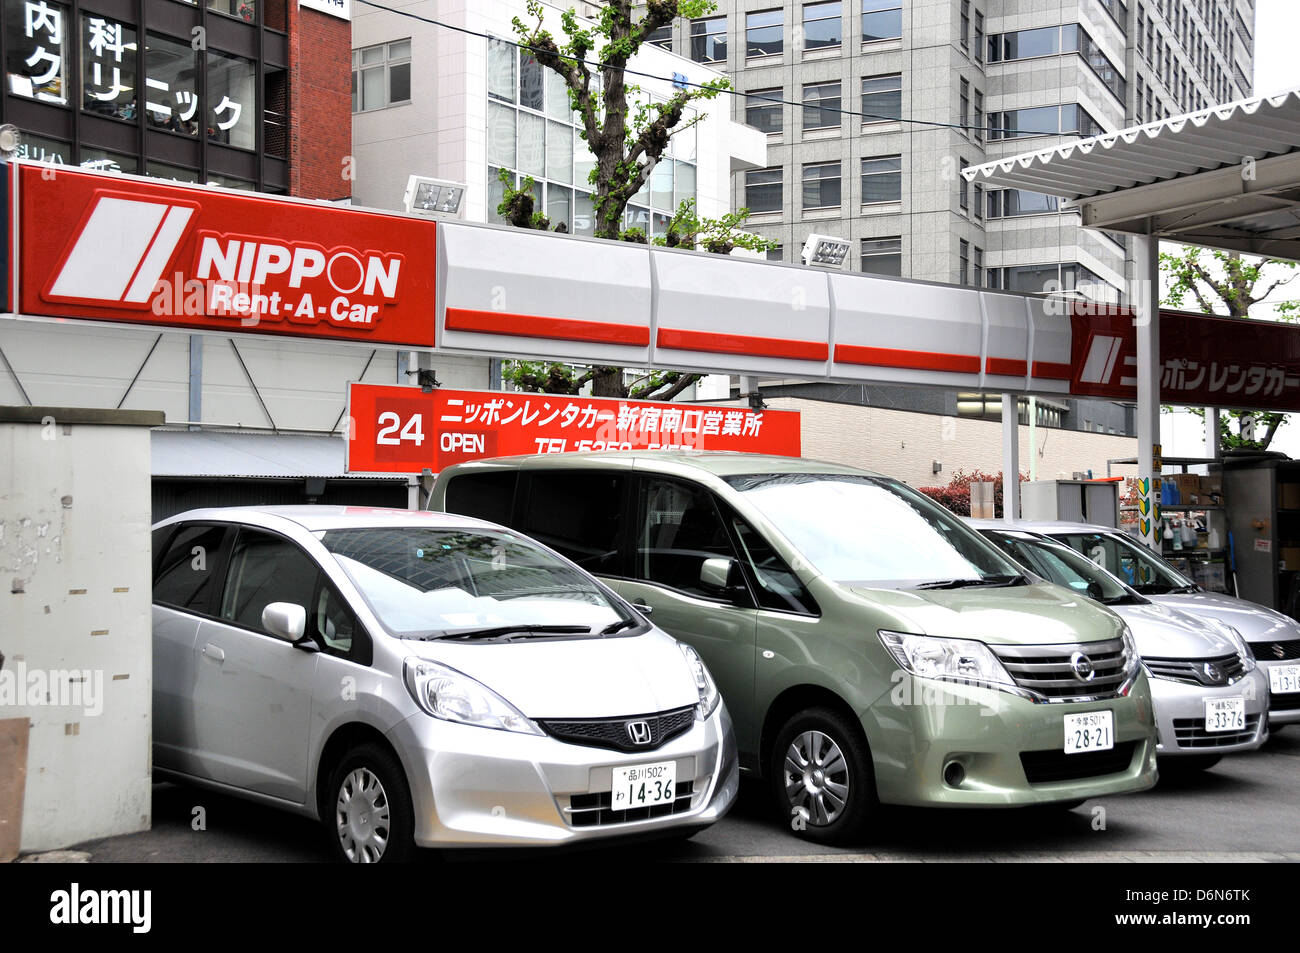 Nippon rent a car office in street Shinjuku Tokyo Japan Stock Photo - Alamy